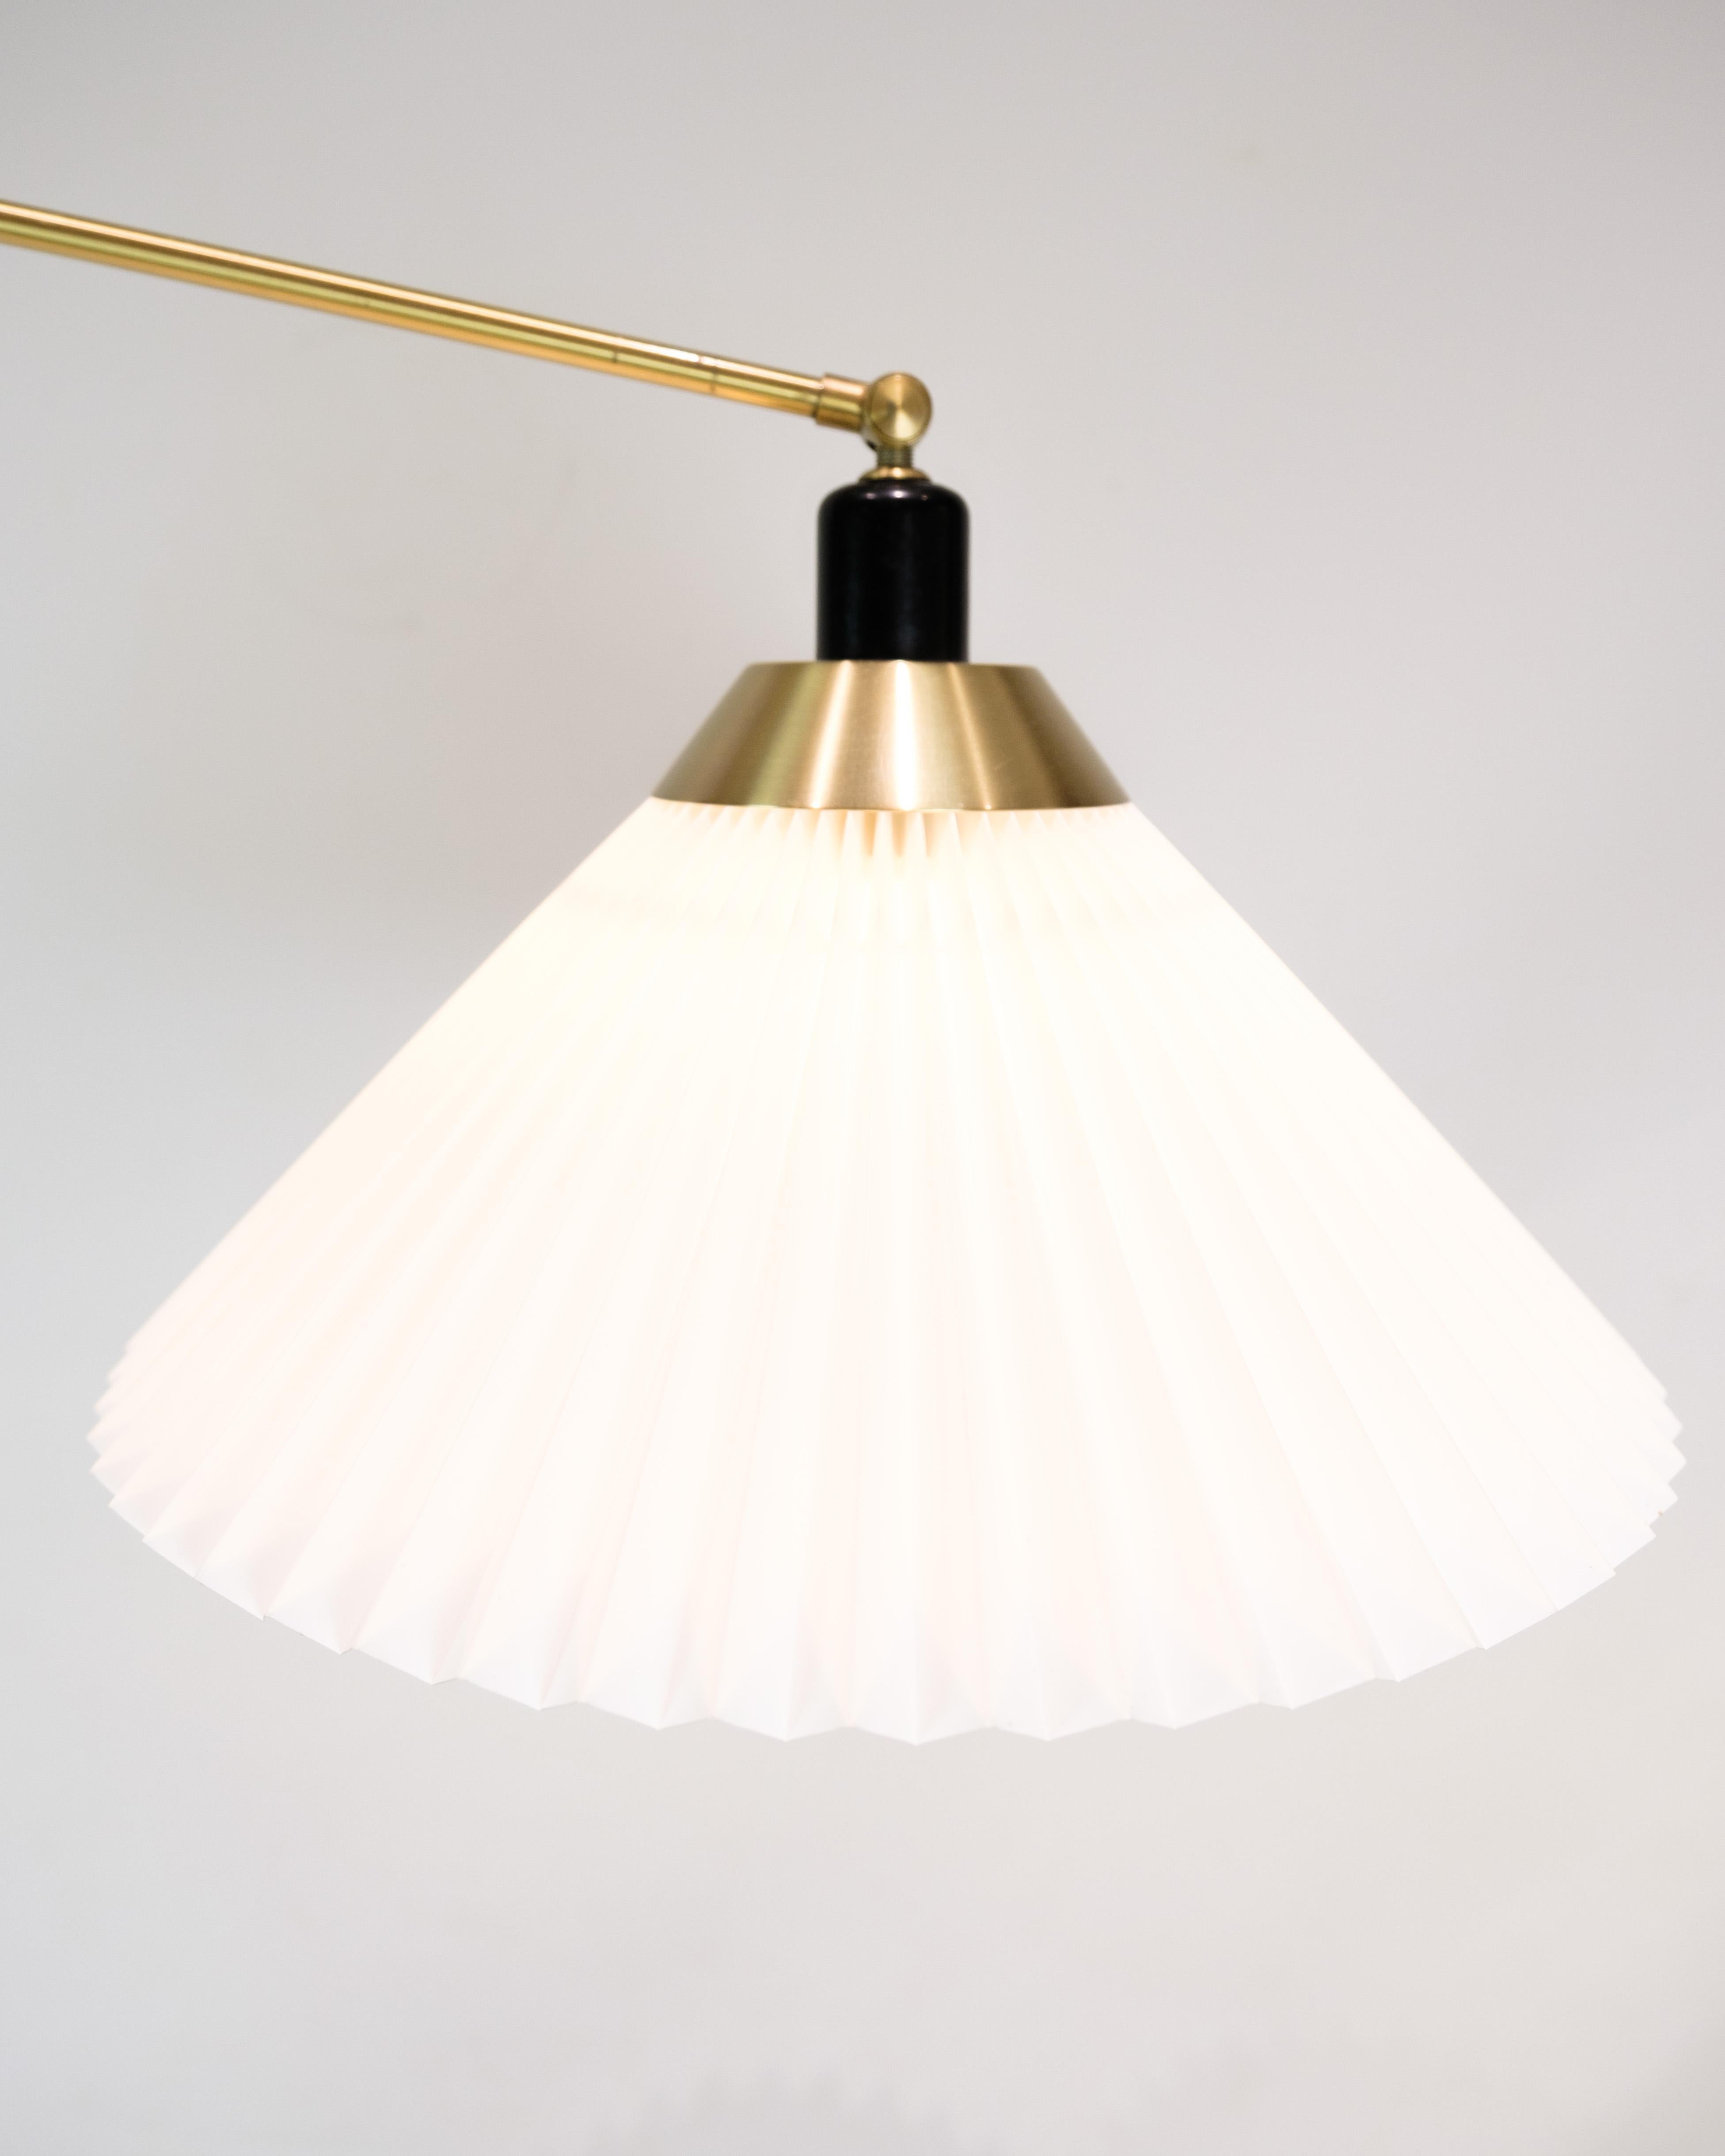 Mid-Century Modern Floor Lamp Model 349 in Brass by Le Klint from 1970 For Sale